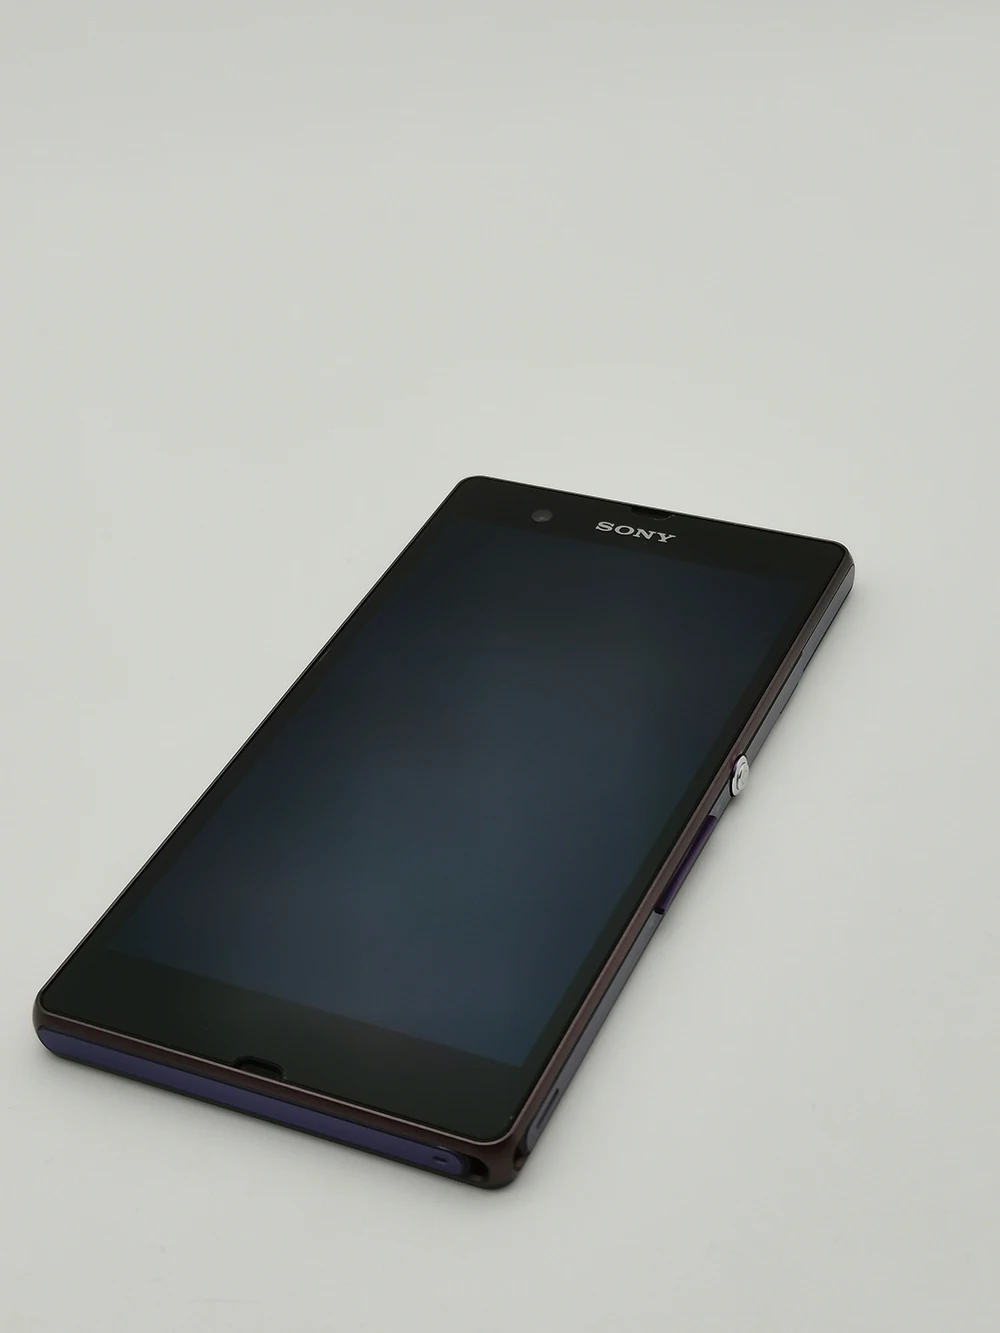 Sony Xperia Z C6602 C6603 Reciklirana Originalni разблокированный 16 GB 2 GB ram-a 5,0 